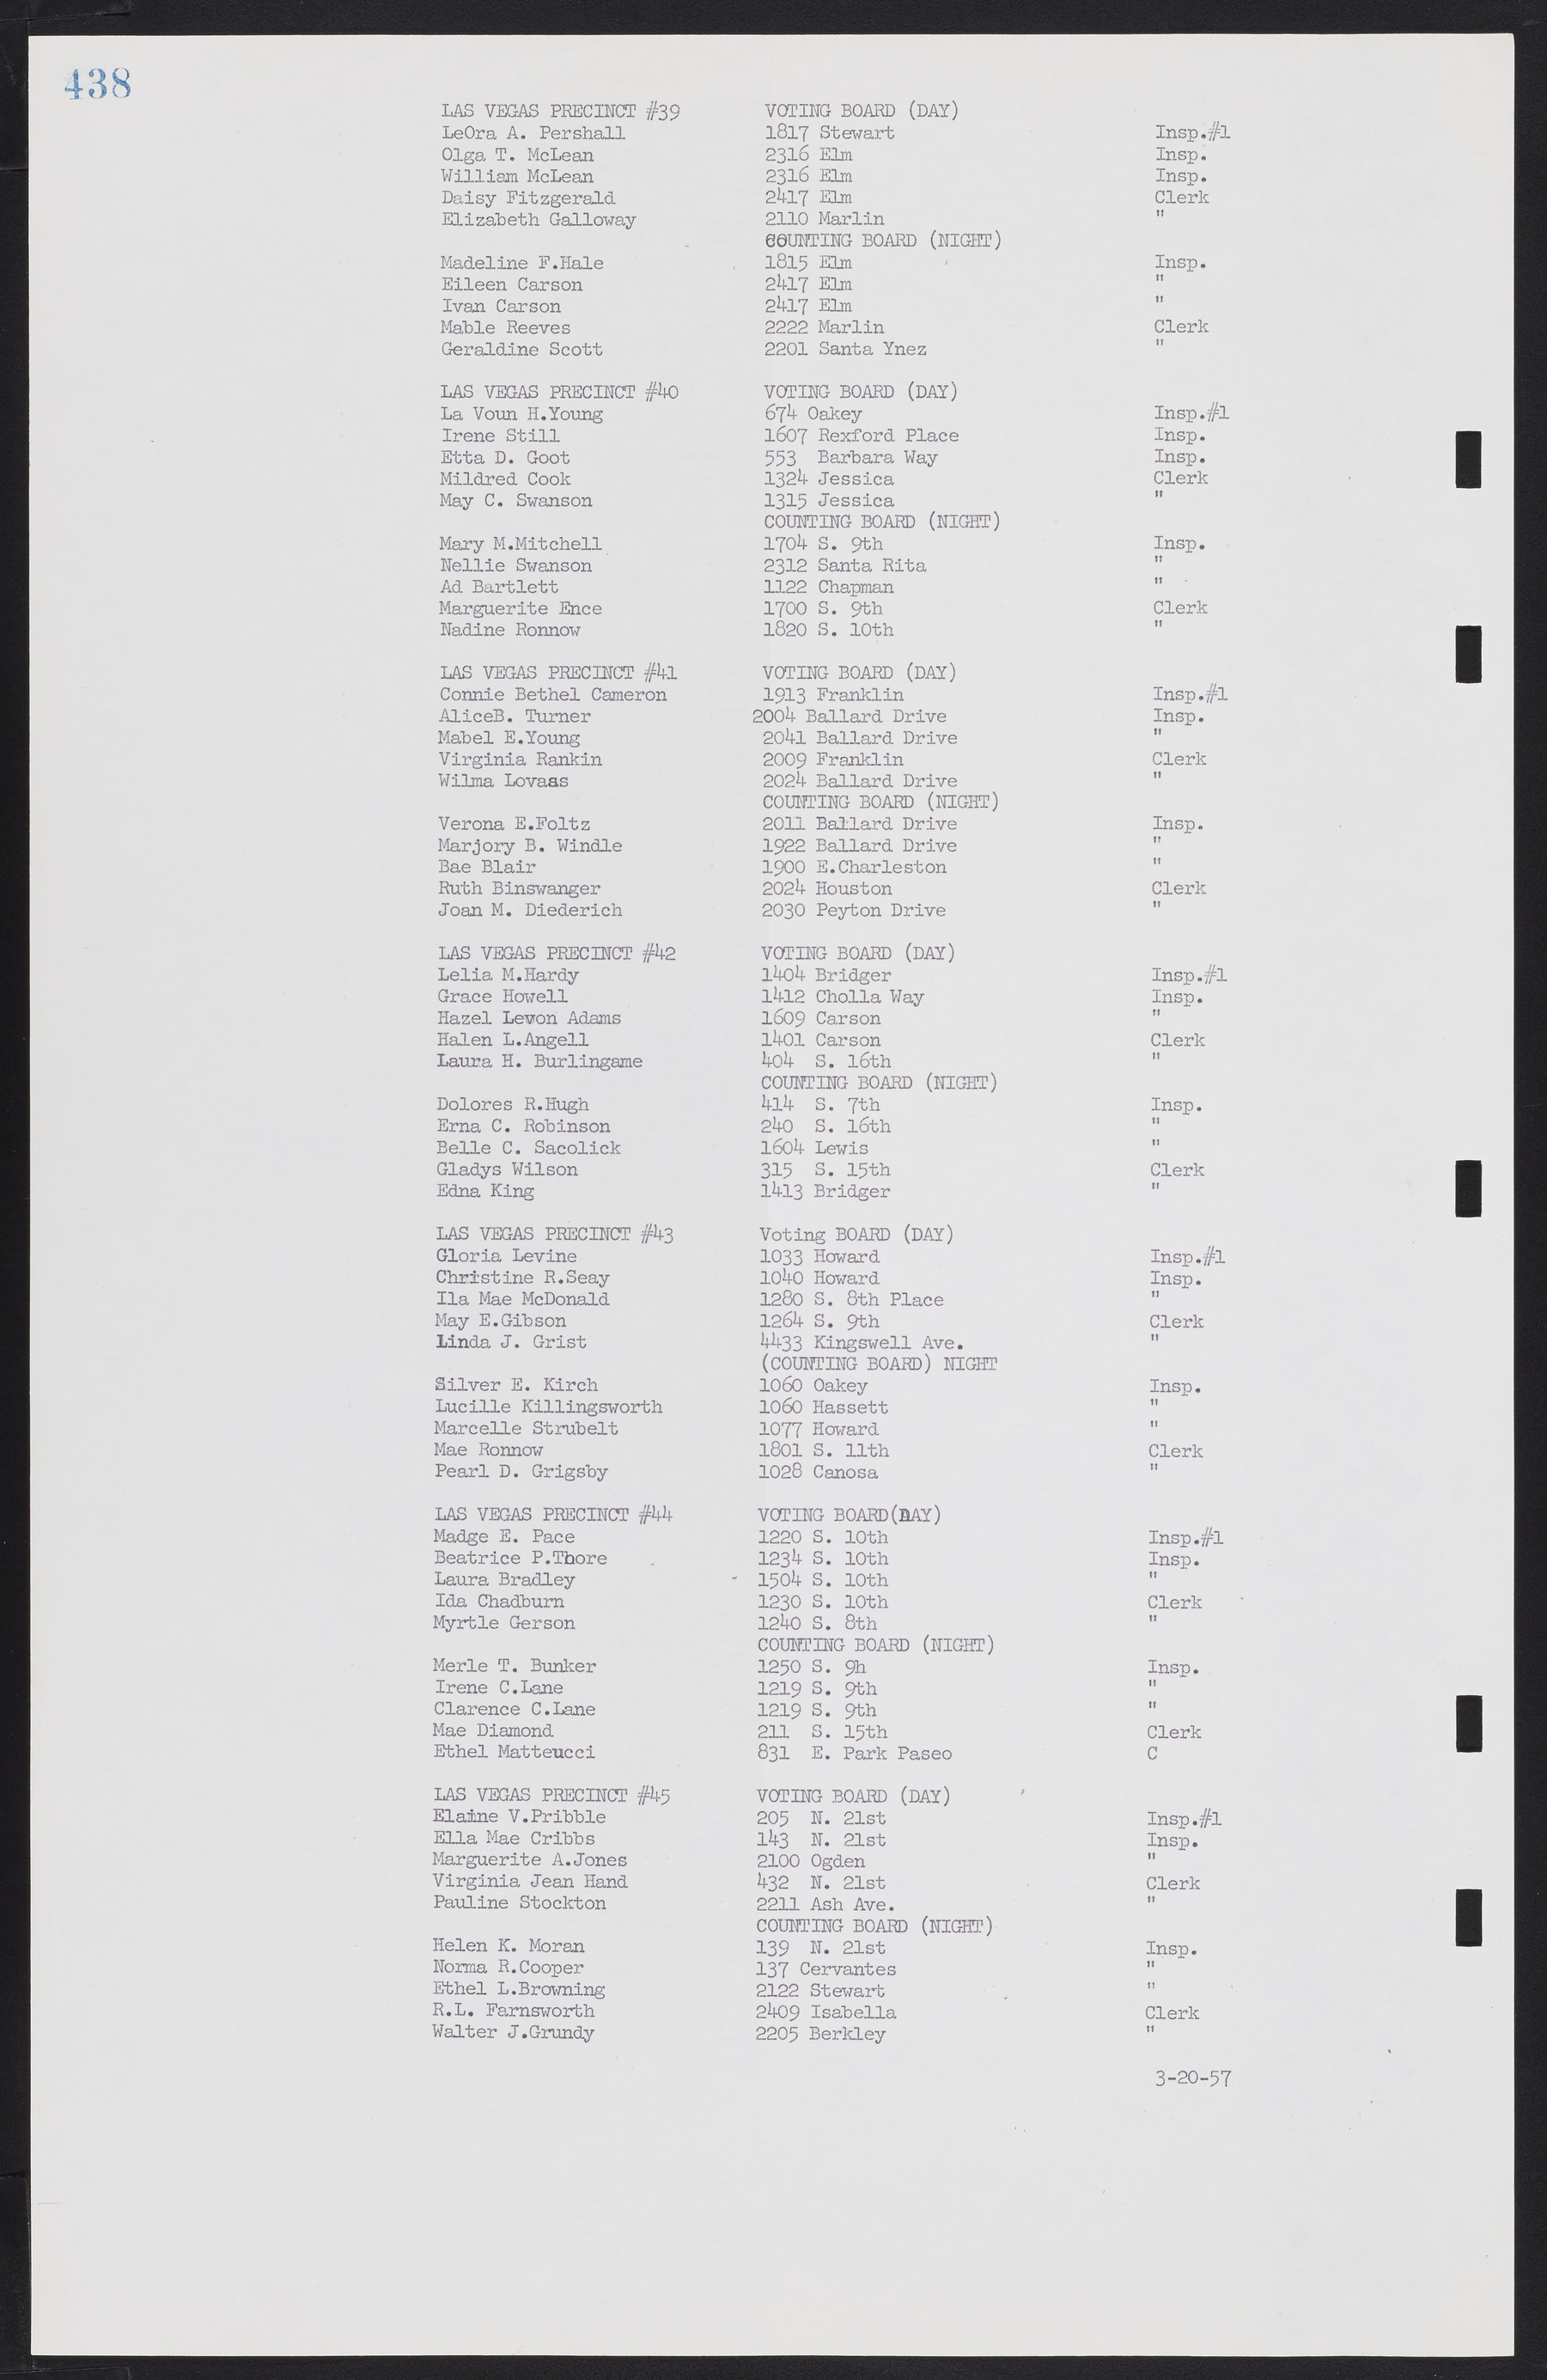 Las Vegas City Commission Minutes, September 21, 1955 to November 20, 1957, lvc000010-458